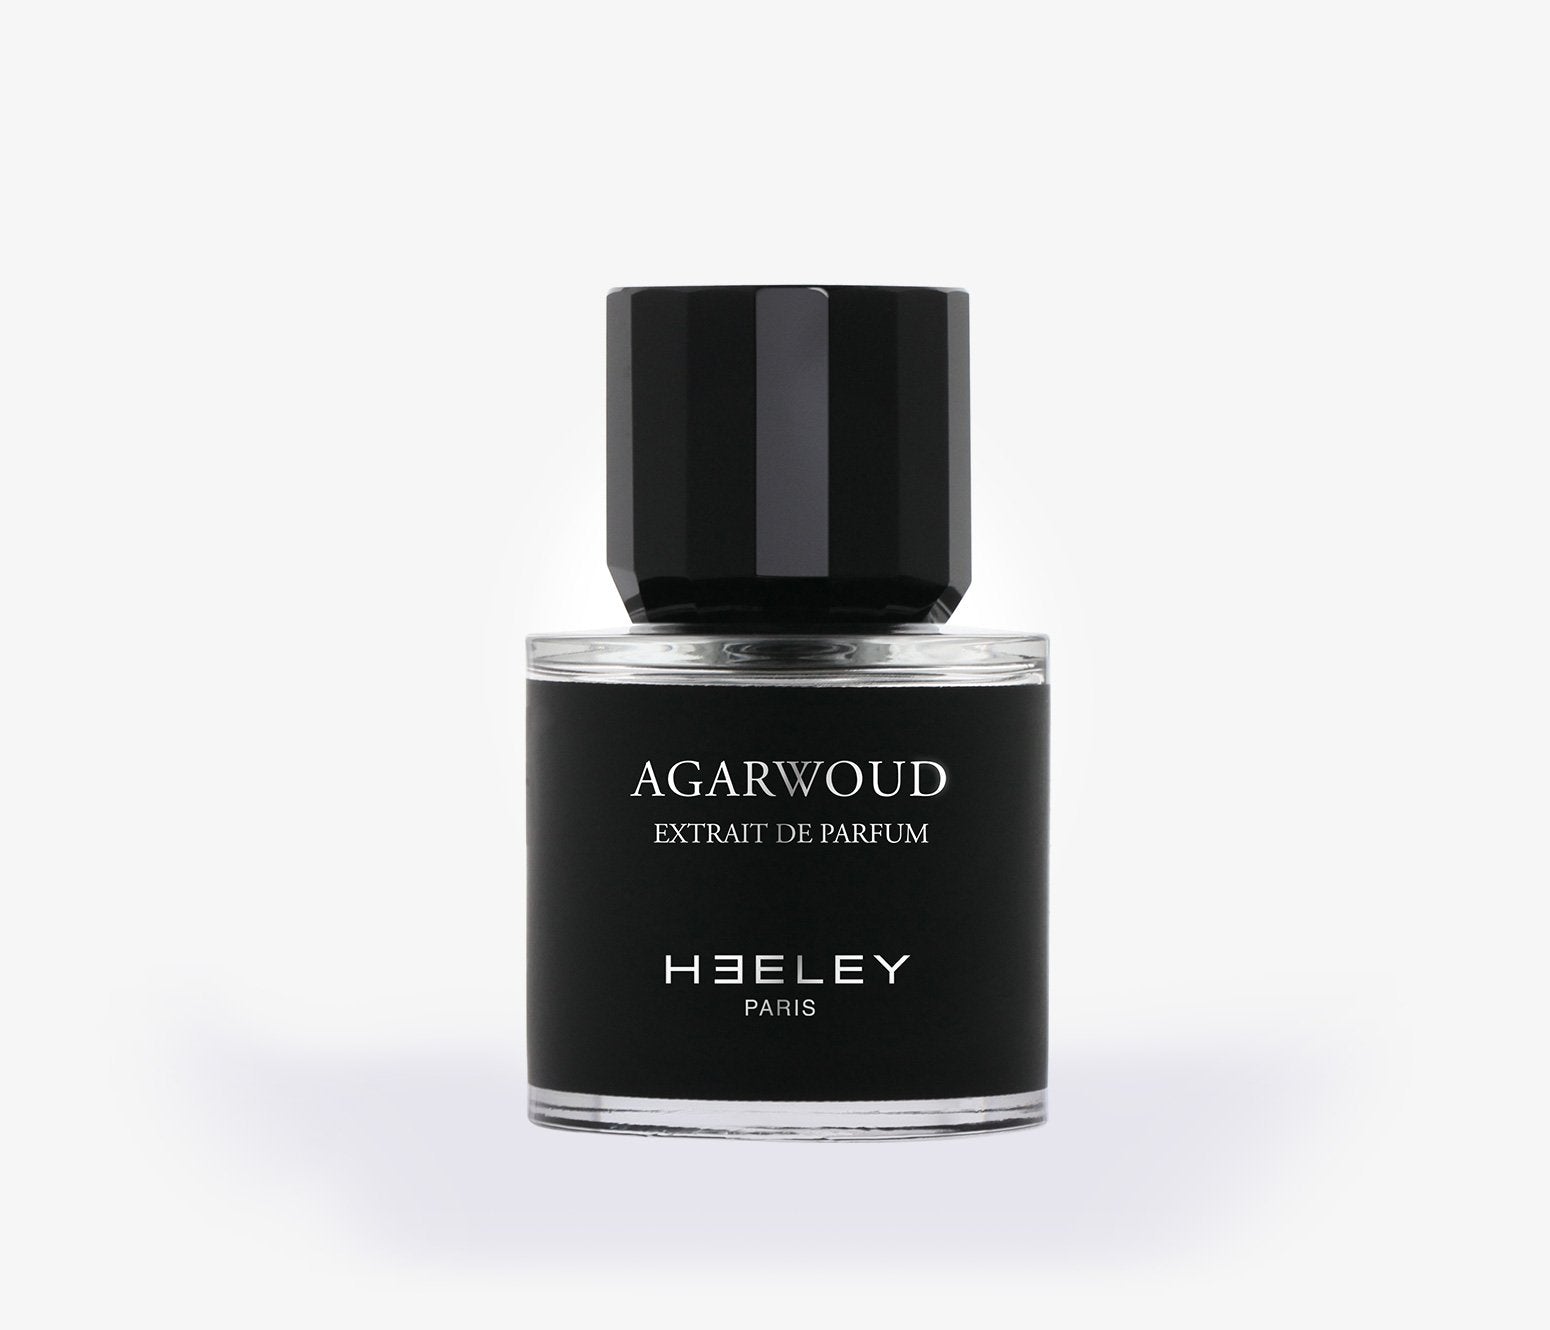 Heeley - Agarwoud Extrait - 50ml - EFK2157 - Product Image - Fragrance - Les Senteurs